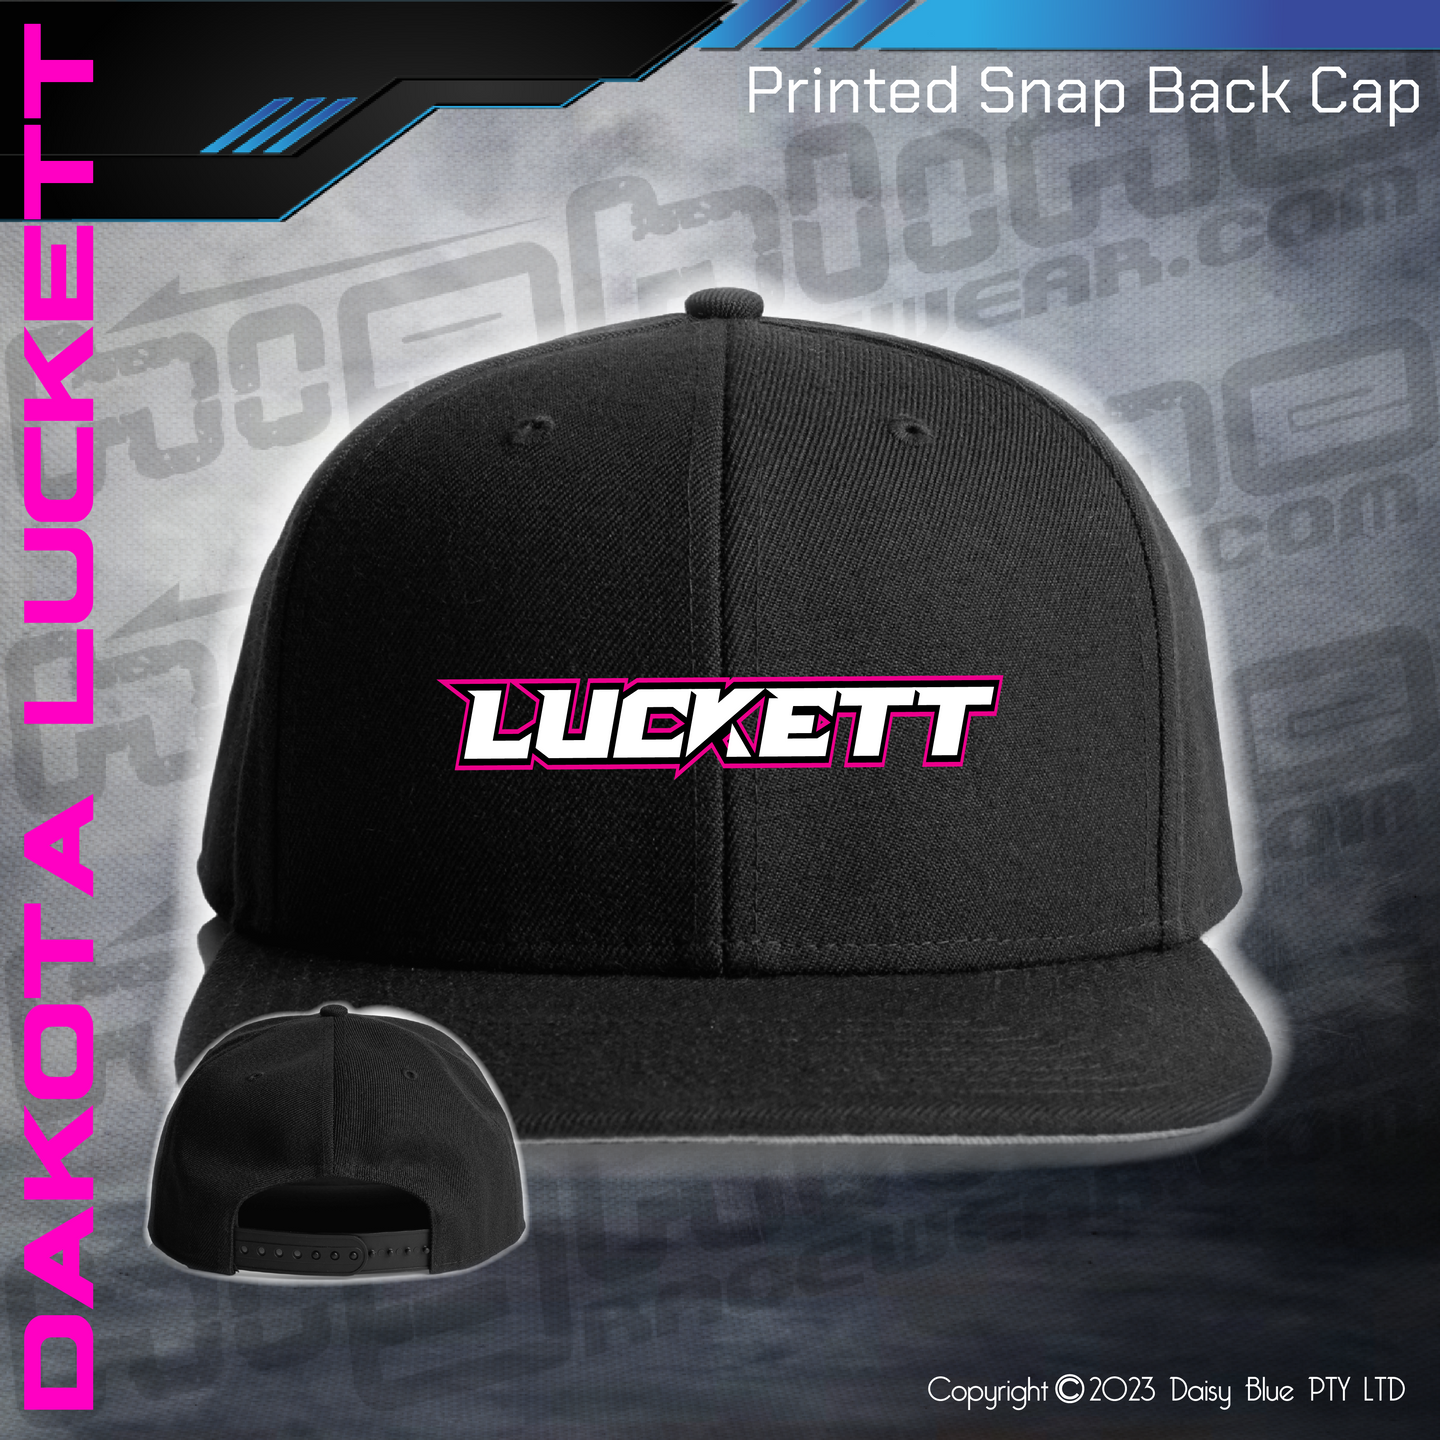 Printed Snap Back CAP - Dakota Luckett